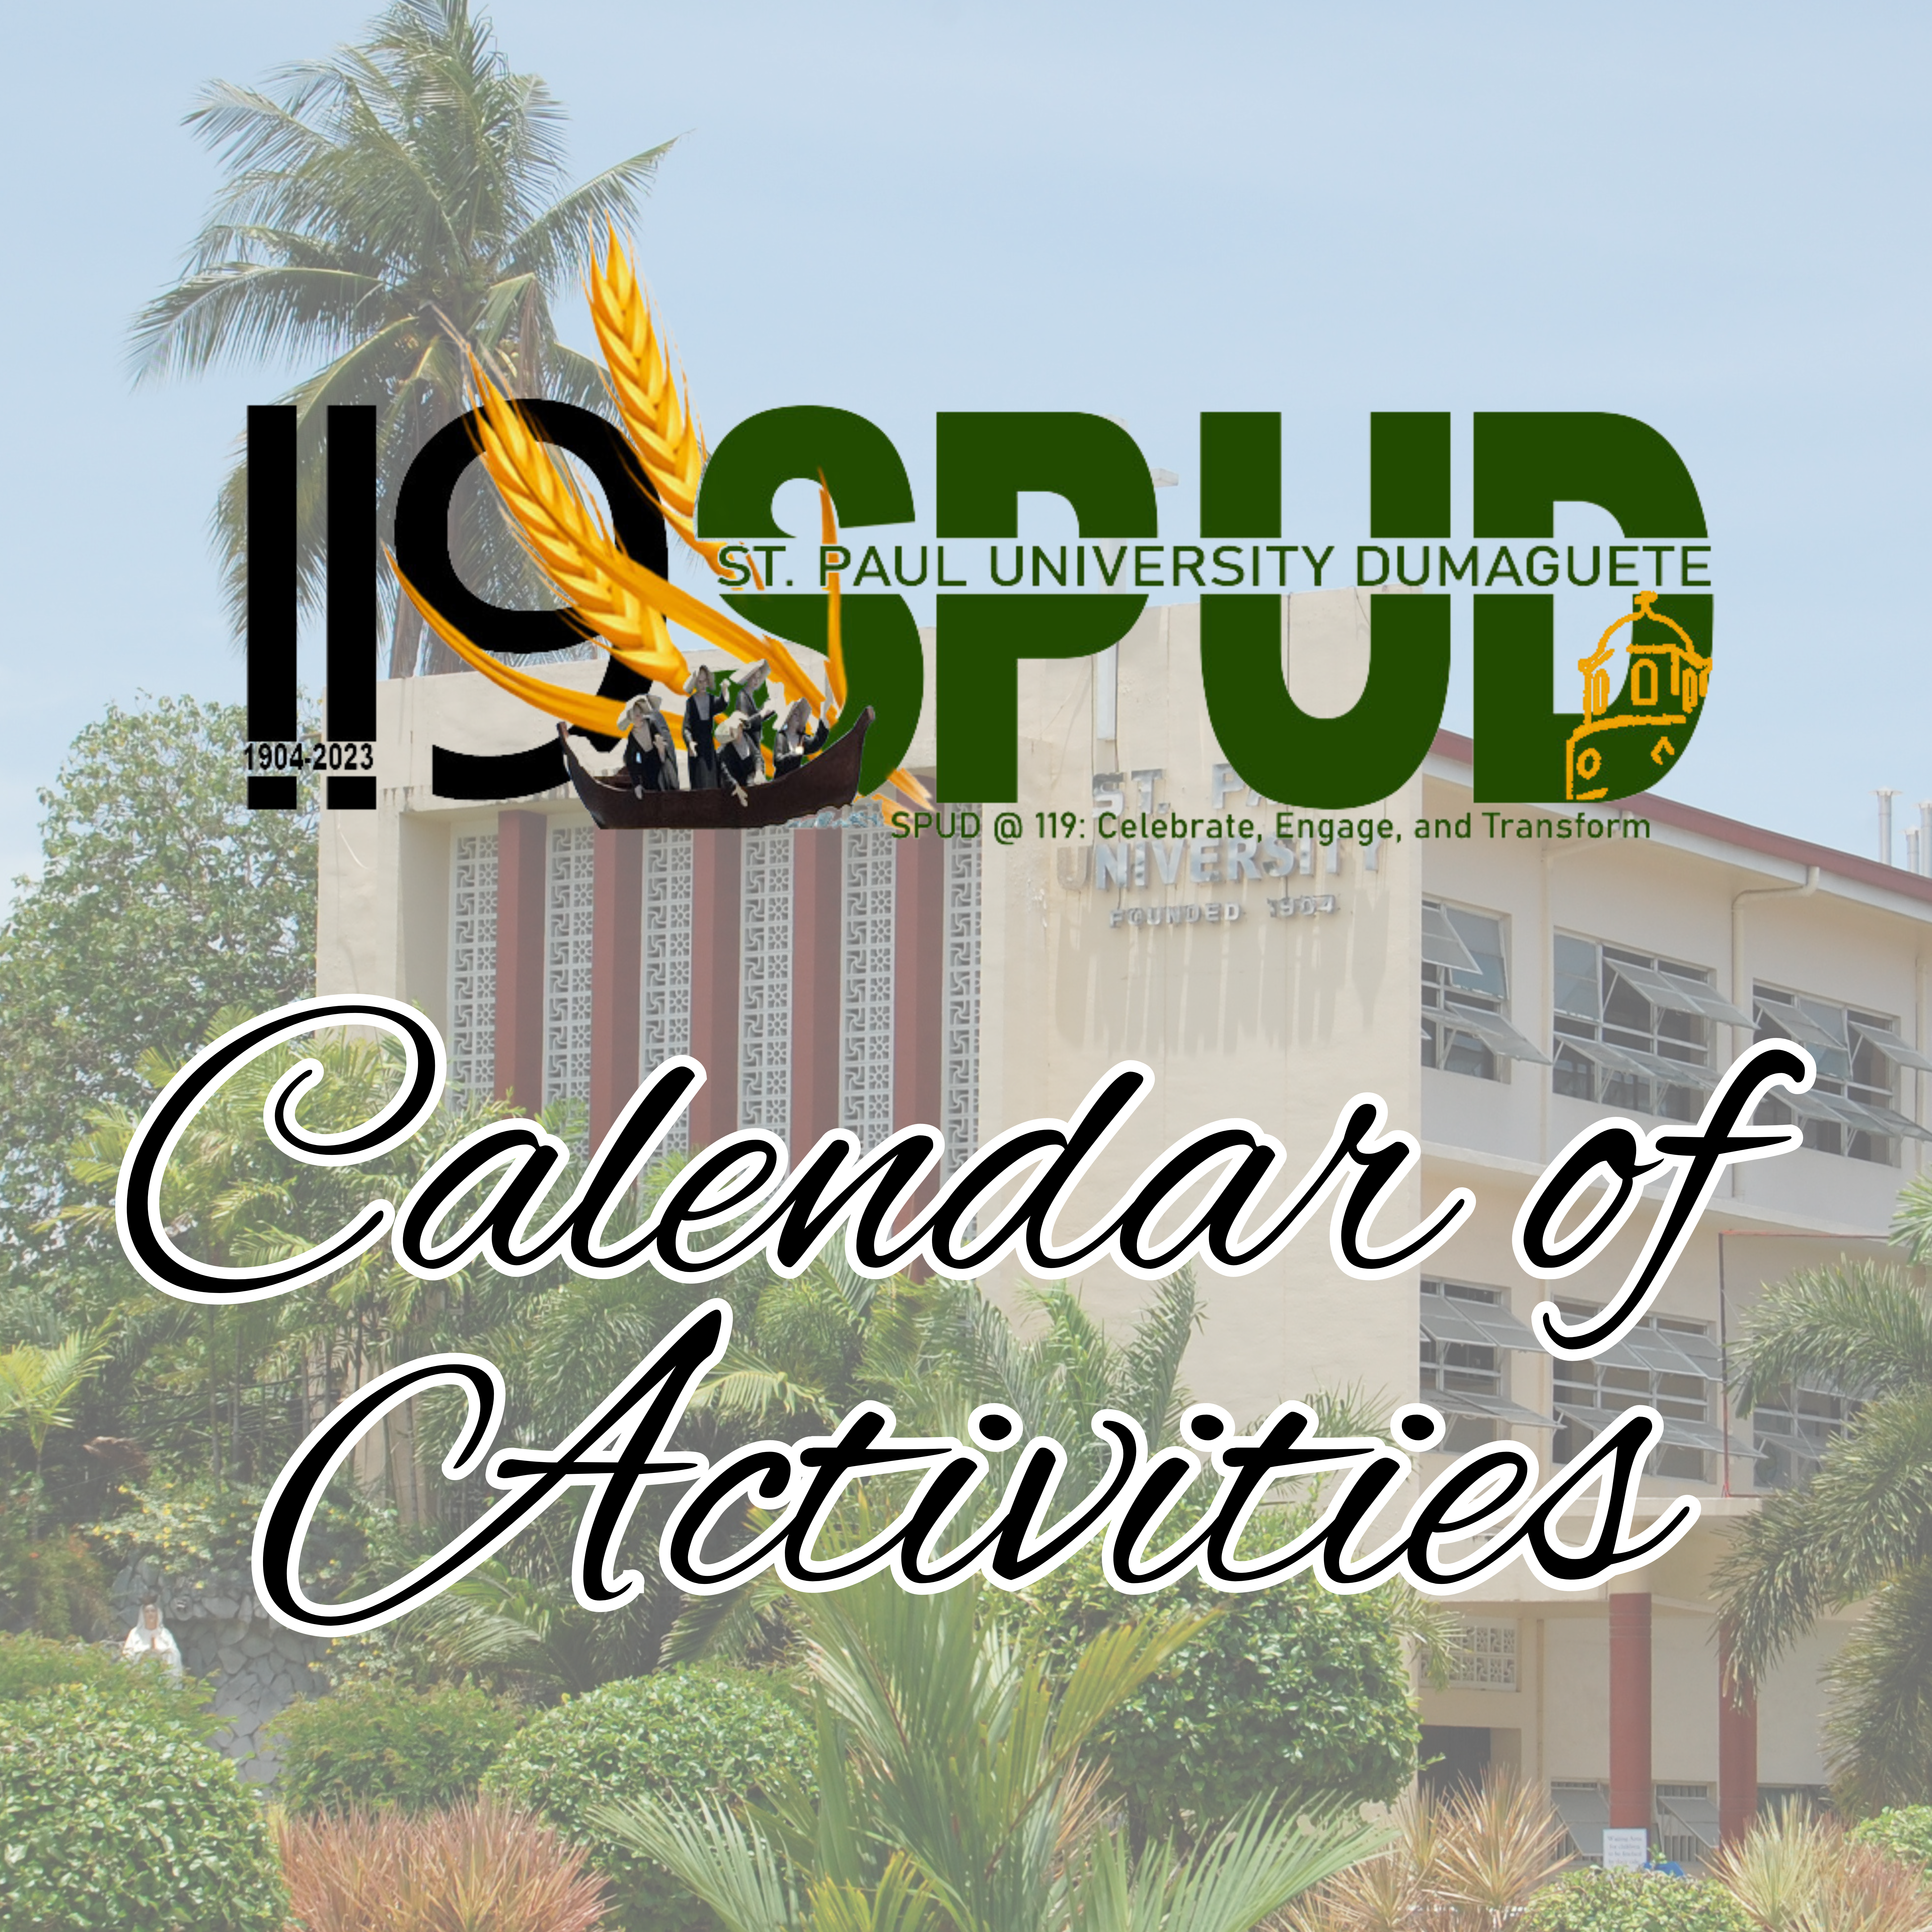 119th Foundation Anniversary Calendar of Activities